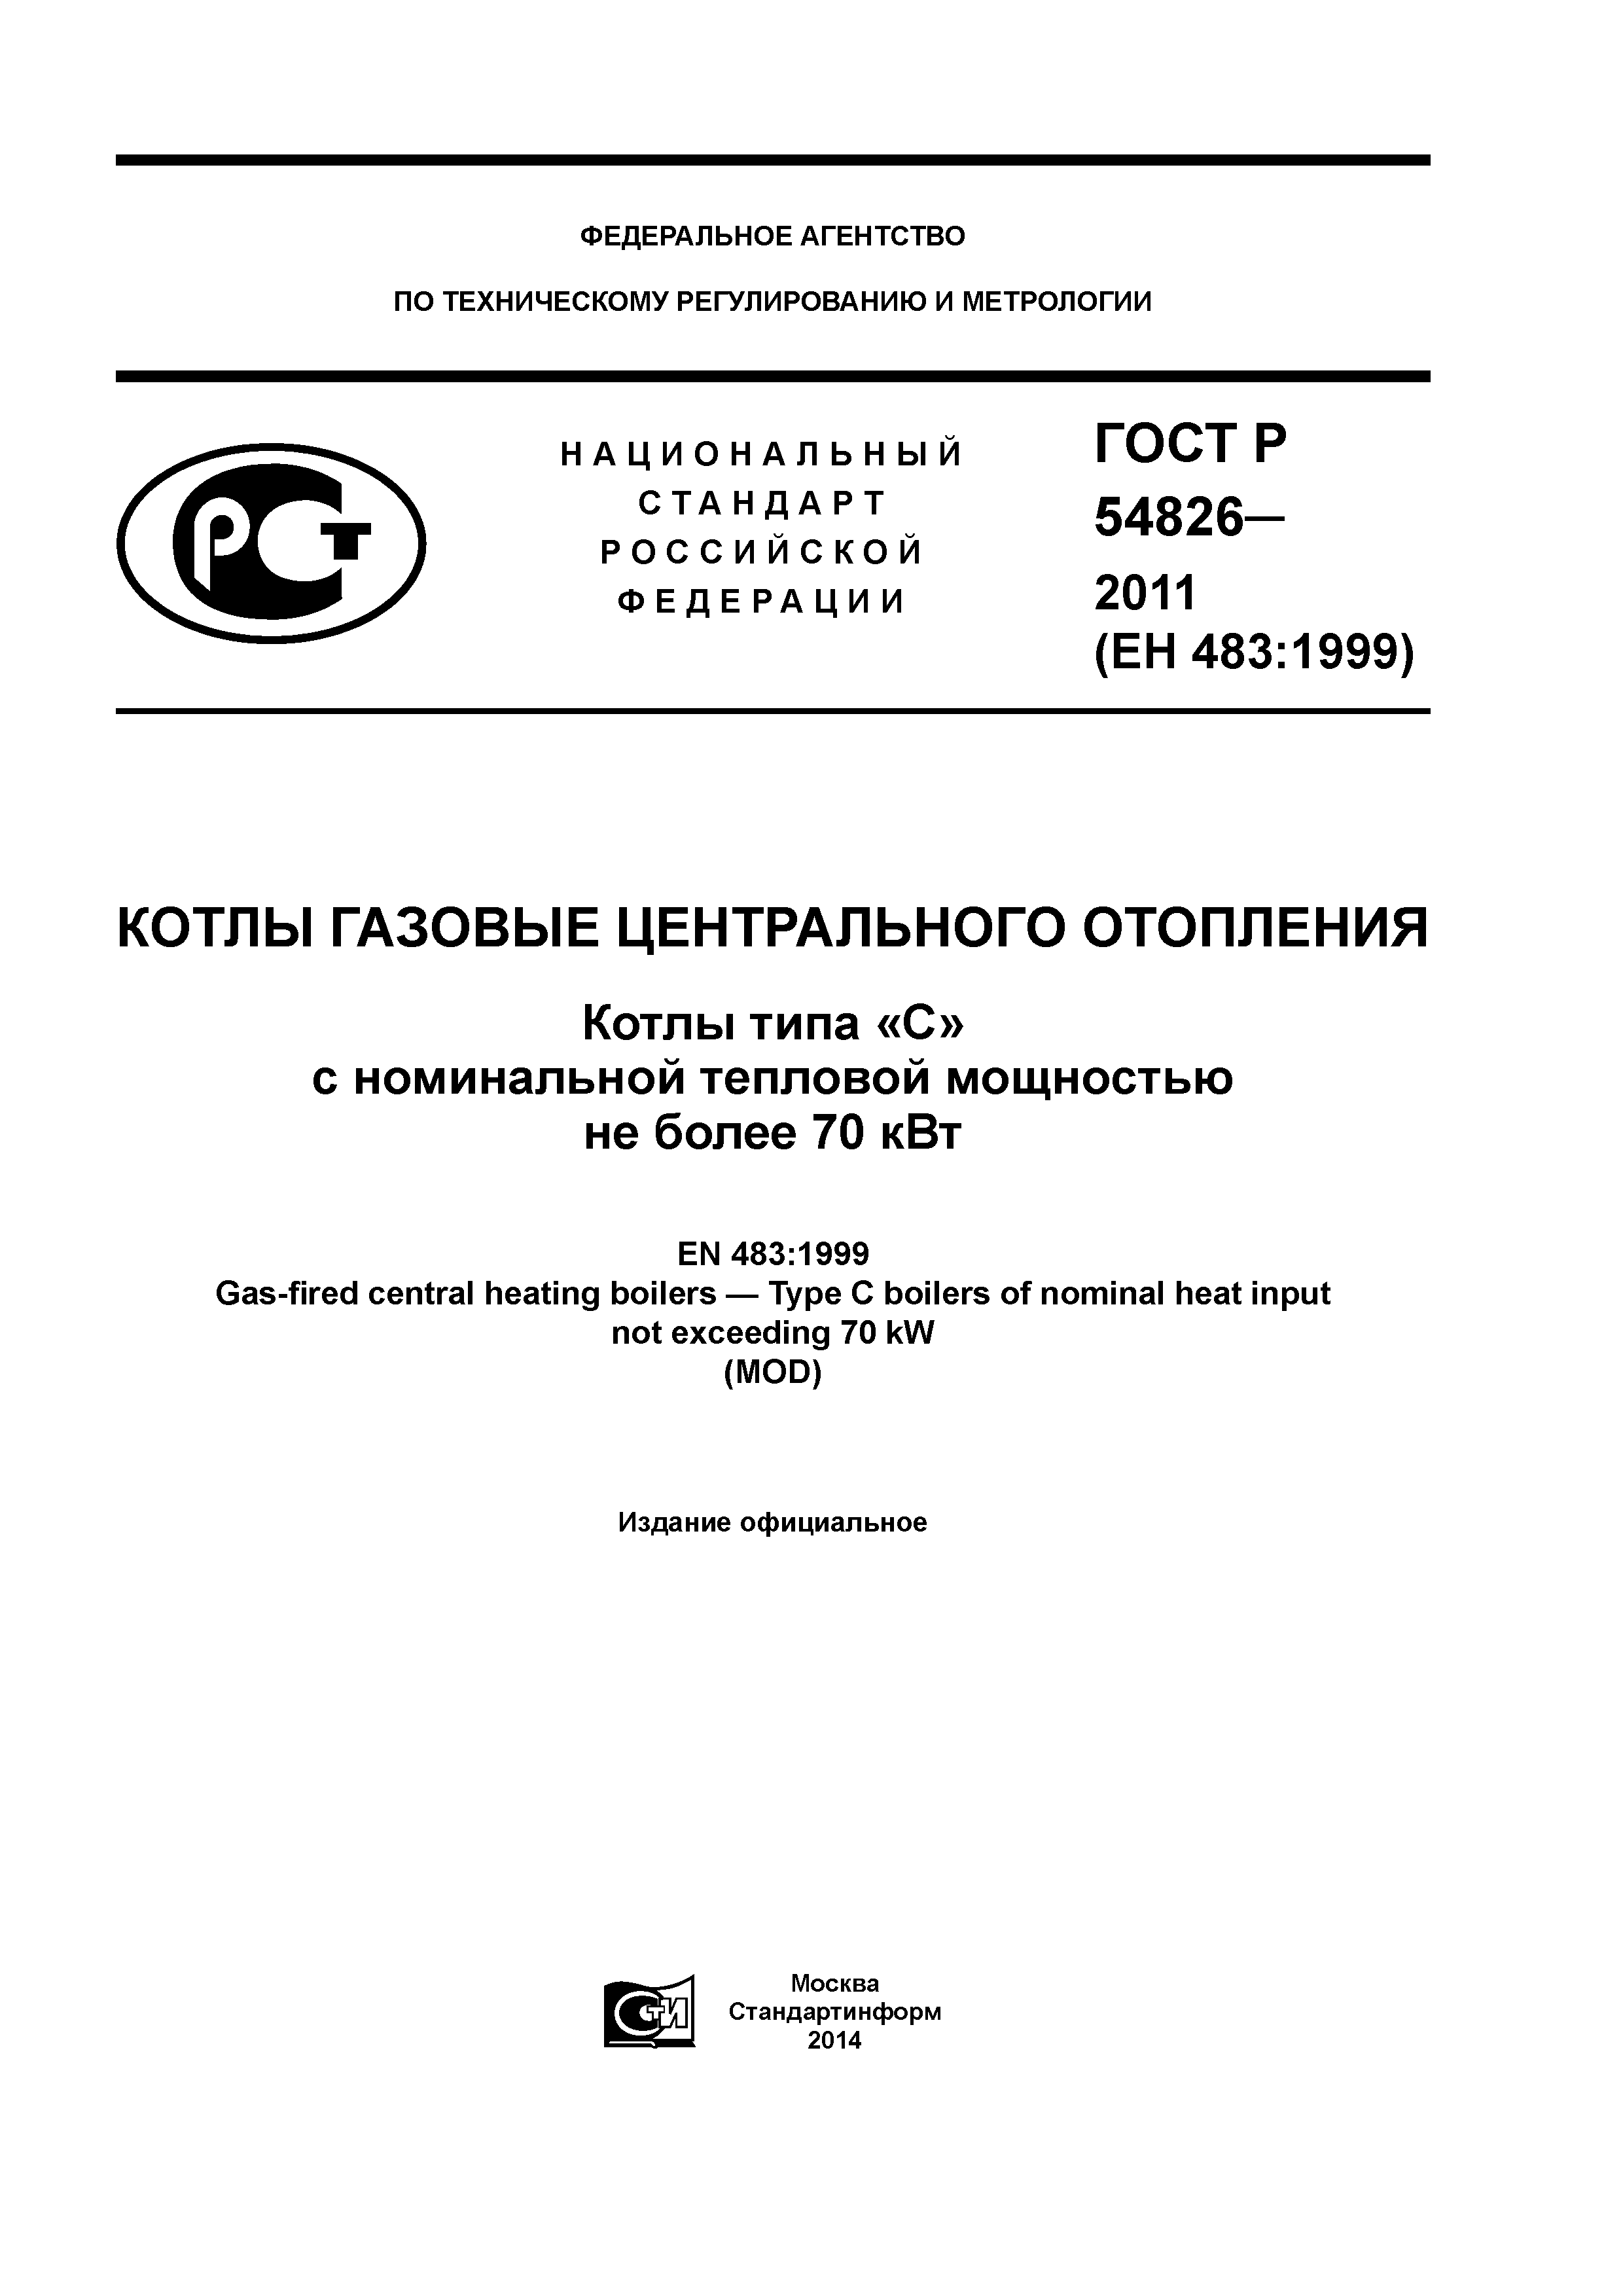 ГОСТ Р 54826-2011